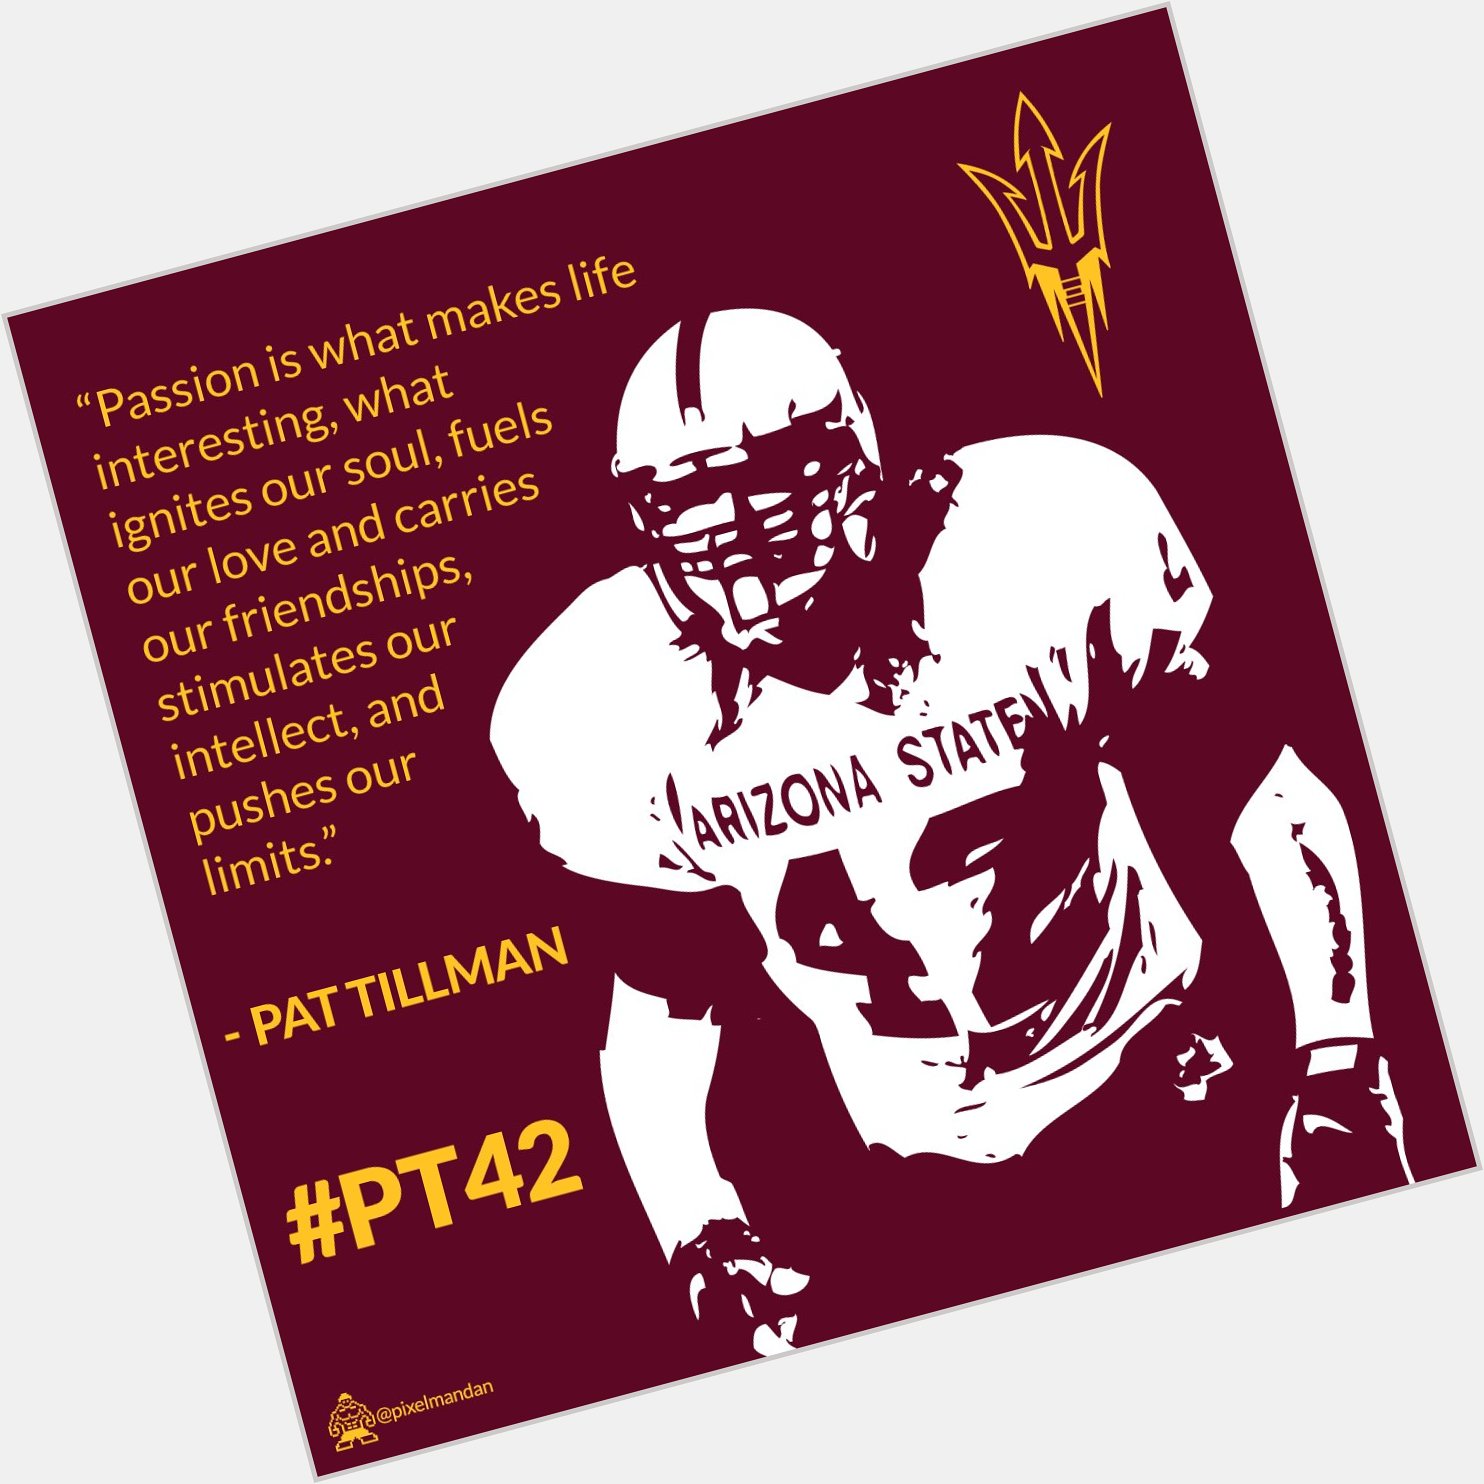 Happy Birthday, Pat Tillman. 